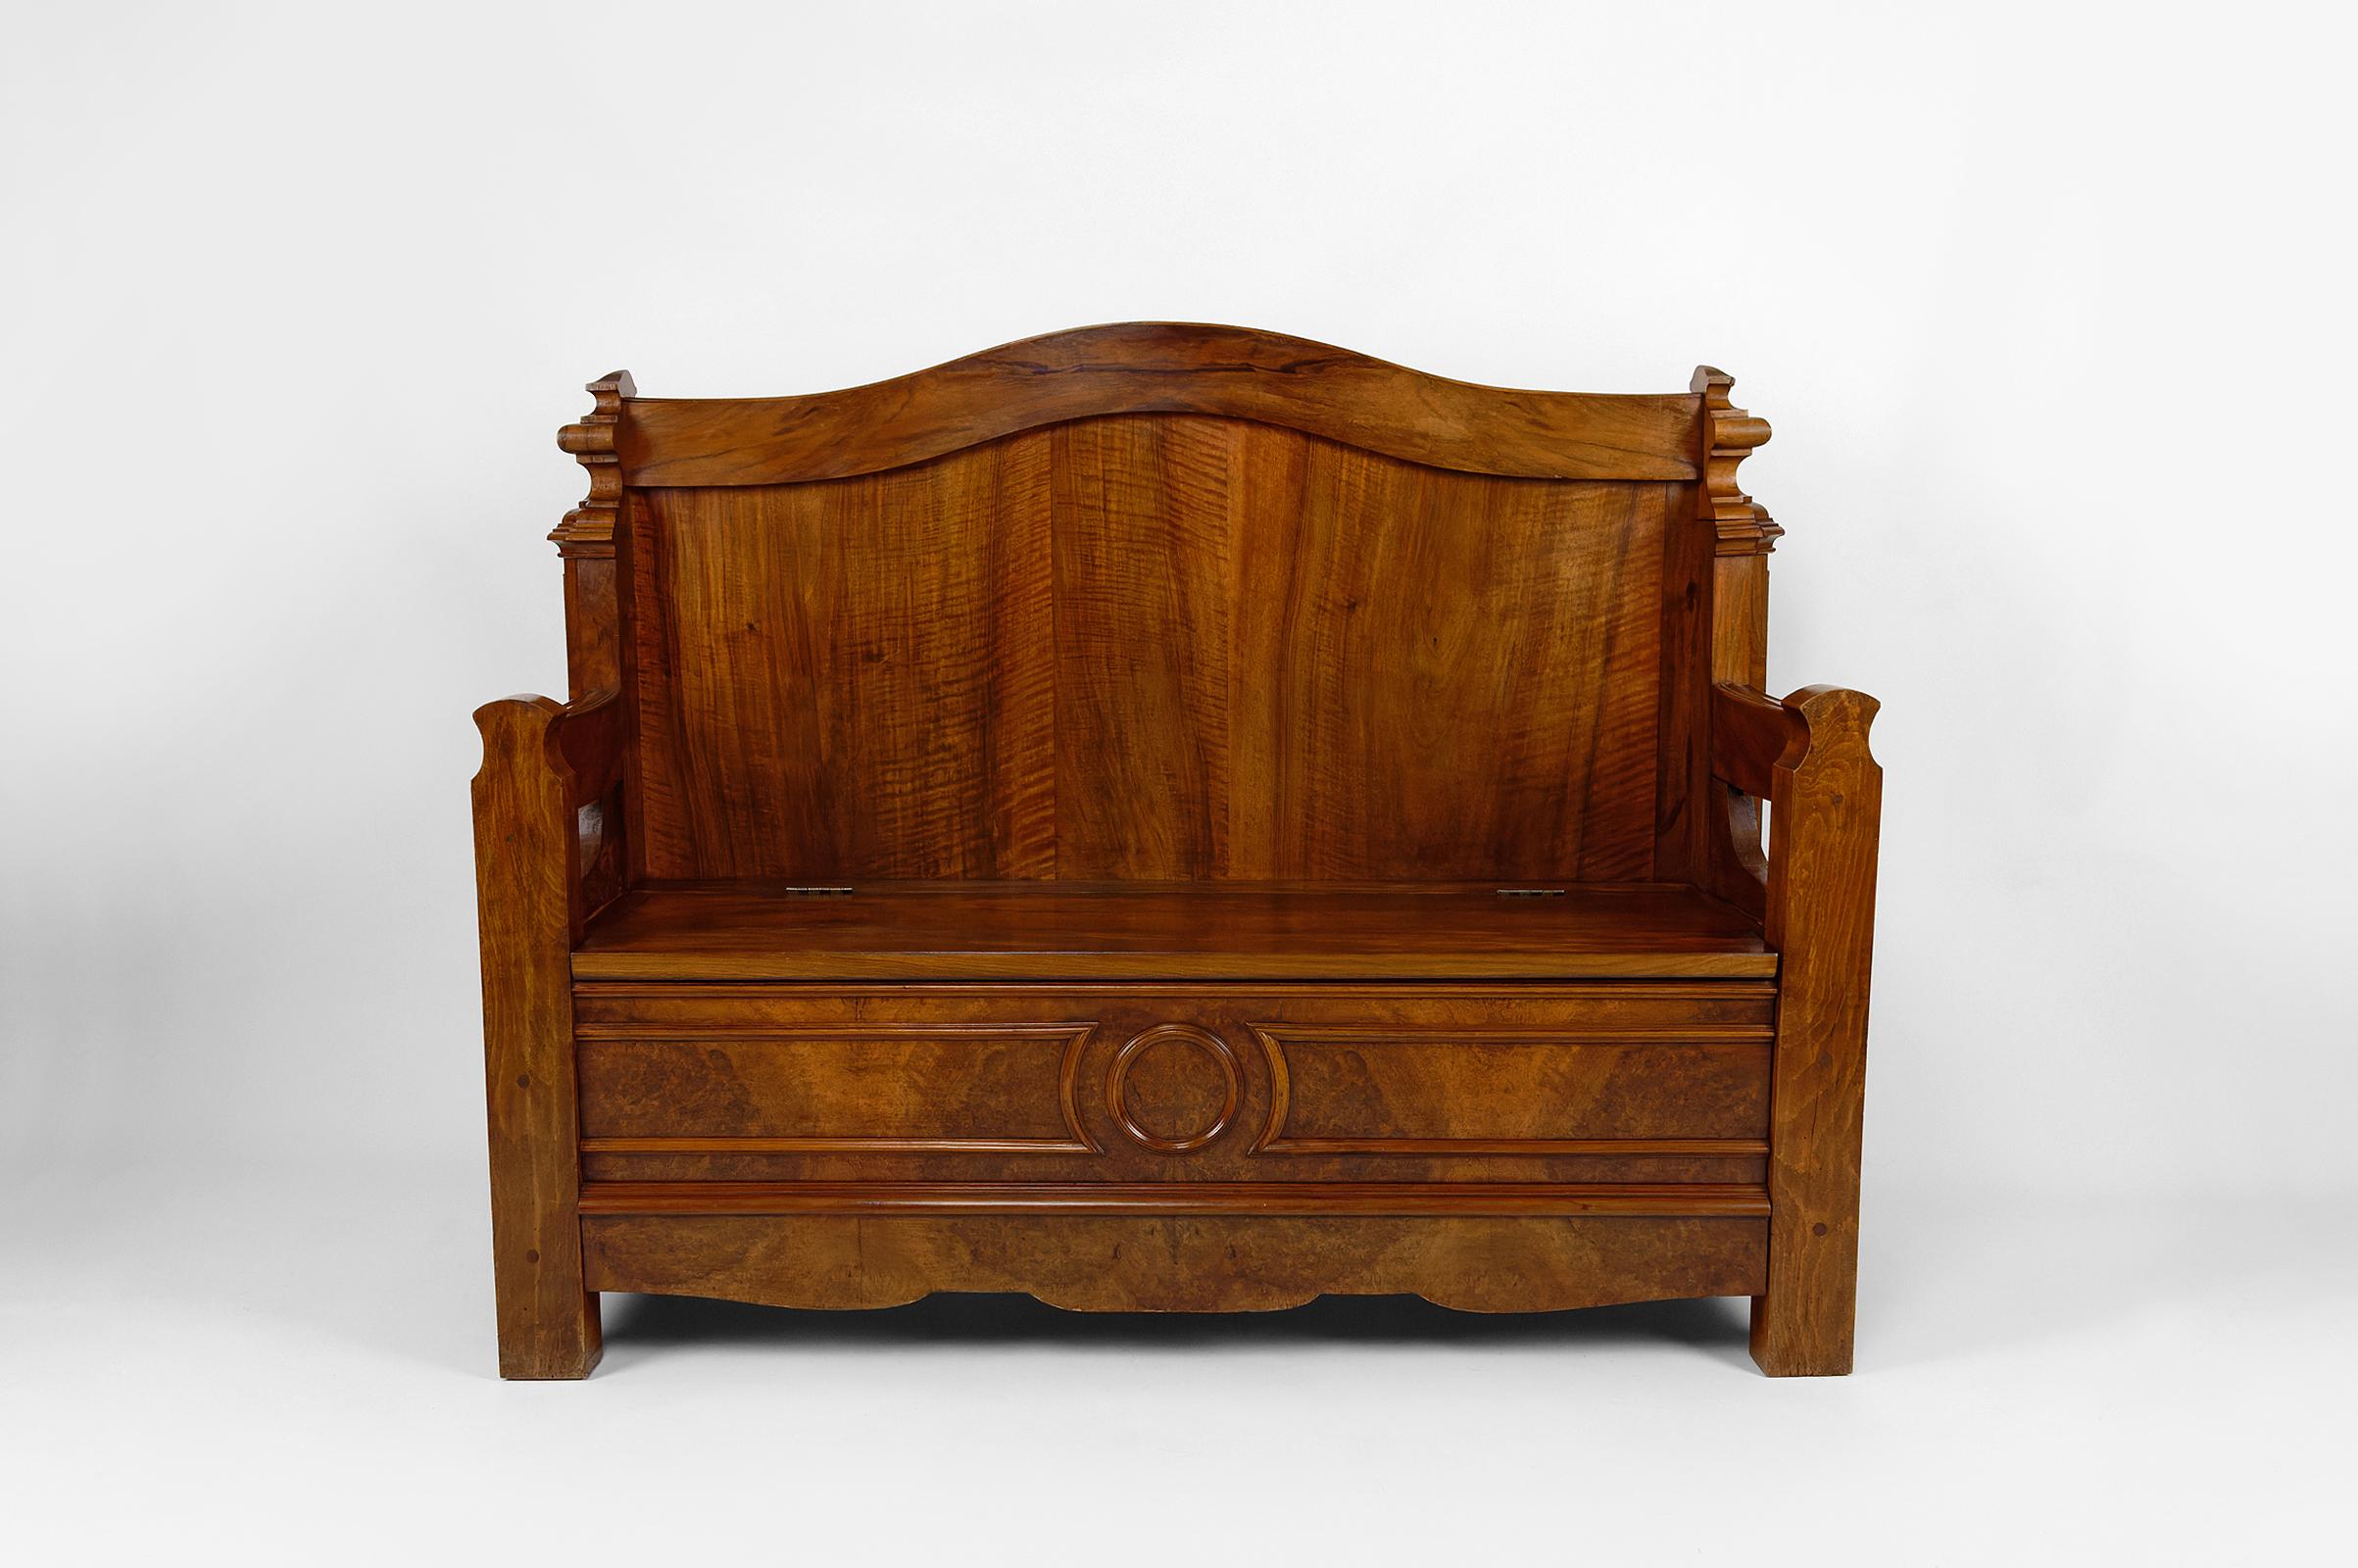 Walnut chest bench, Napoleon III circa 1860.

Good condition.

Dimensions:
height 102 cm
width 135 cm
depth 45 cm

Seat dimensions: height 41 cm, width 111 cm, depth 35 cm